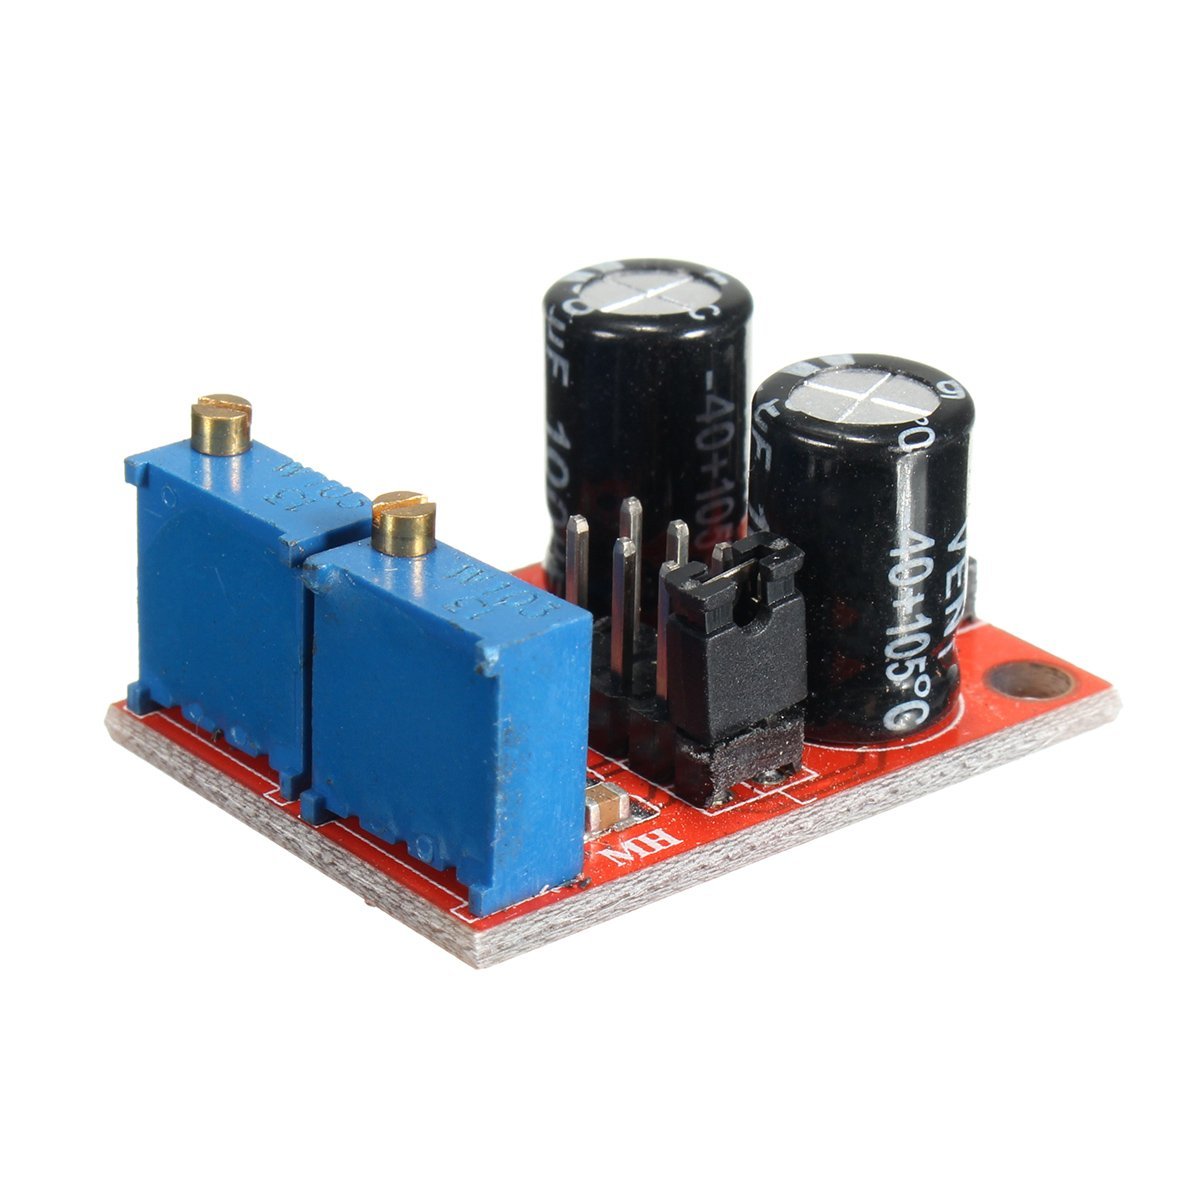 Buy NE555 Pulse Frequency Adjustable Signal Generator Module Online